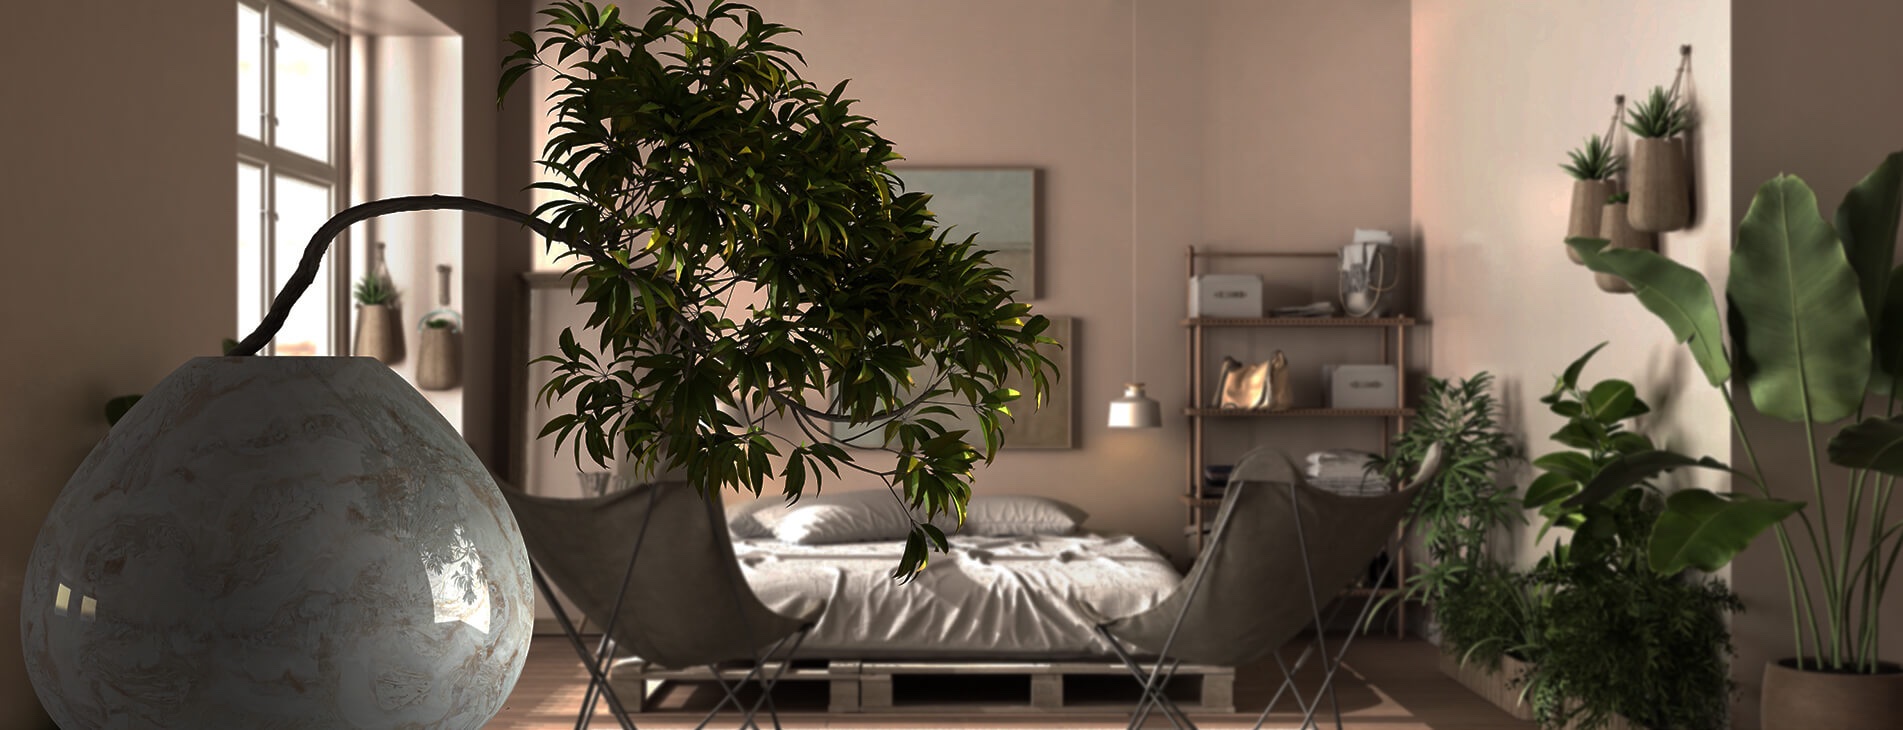 Contemporary bedroom in blush tones